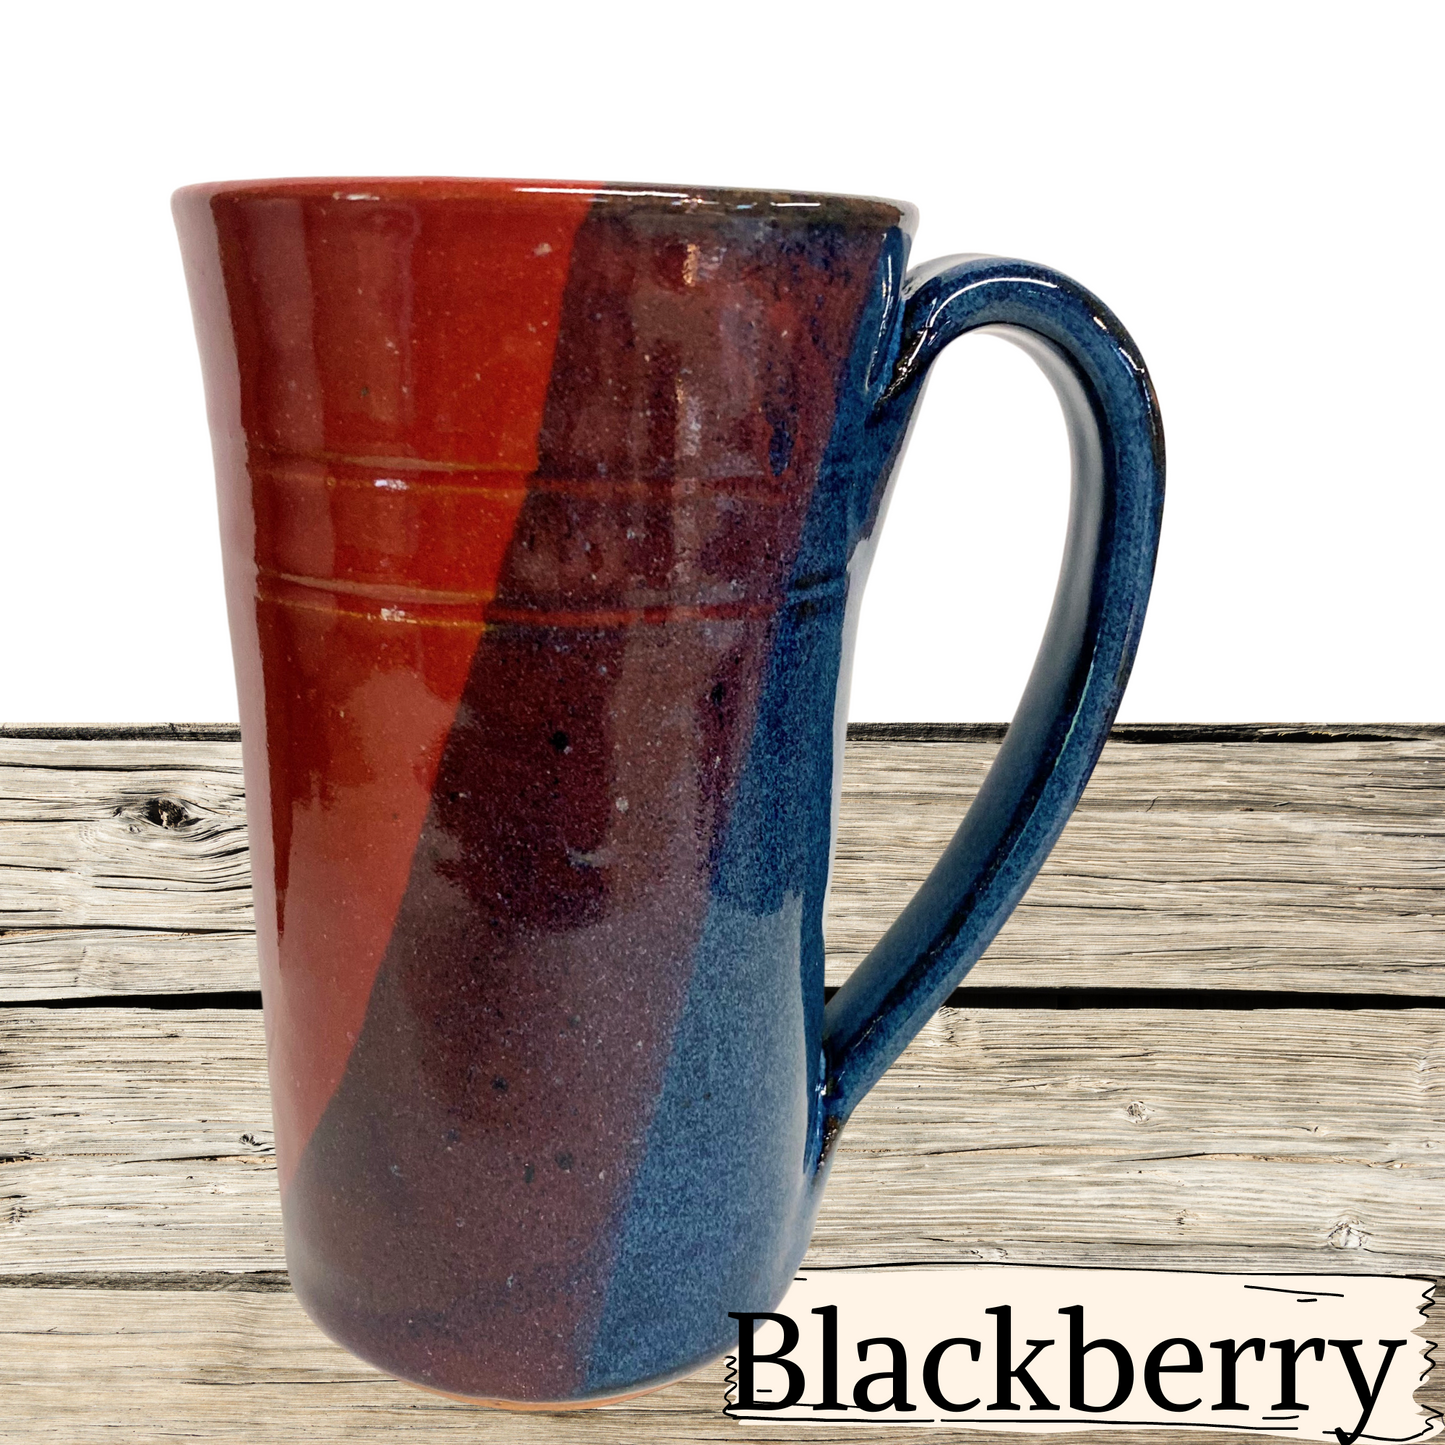 Large coffee mug straight sided. Ceramic cup or mug for coffee or tea. Handmade pottery